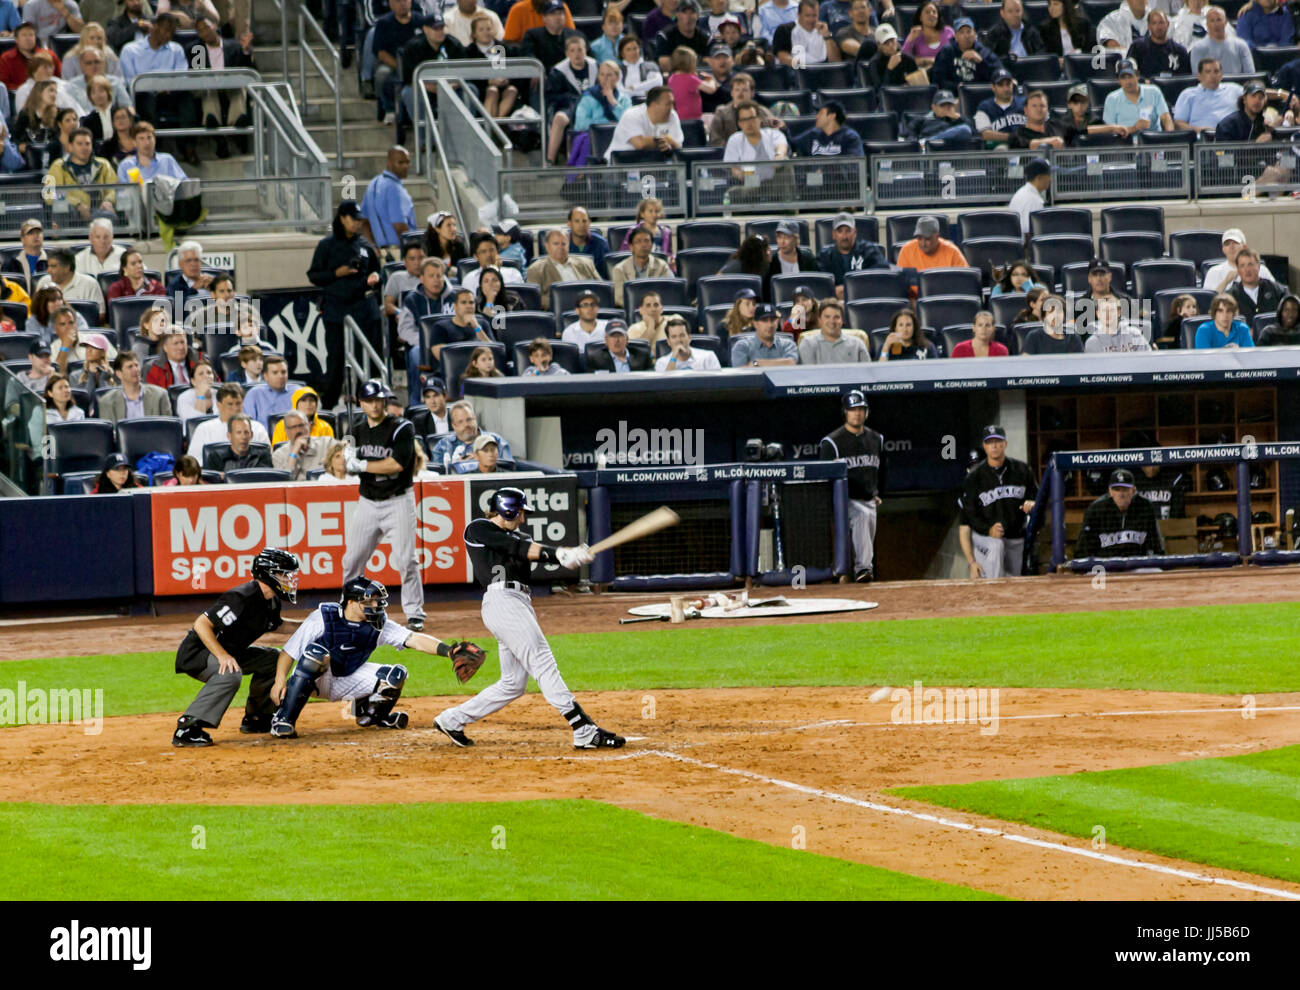 Rockies' Giambi fired up to return to Yankee Stadium – The Denver Post